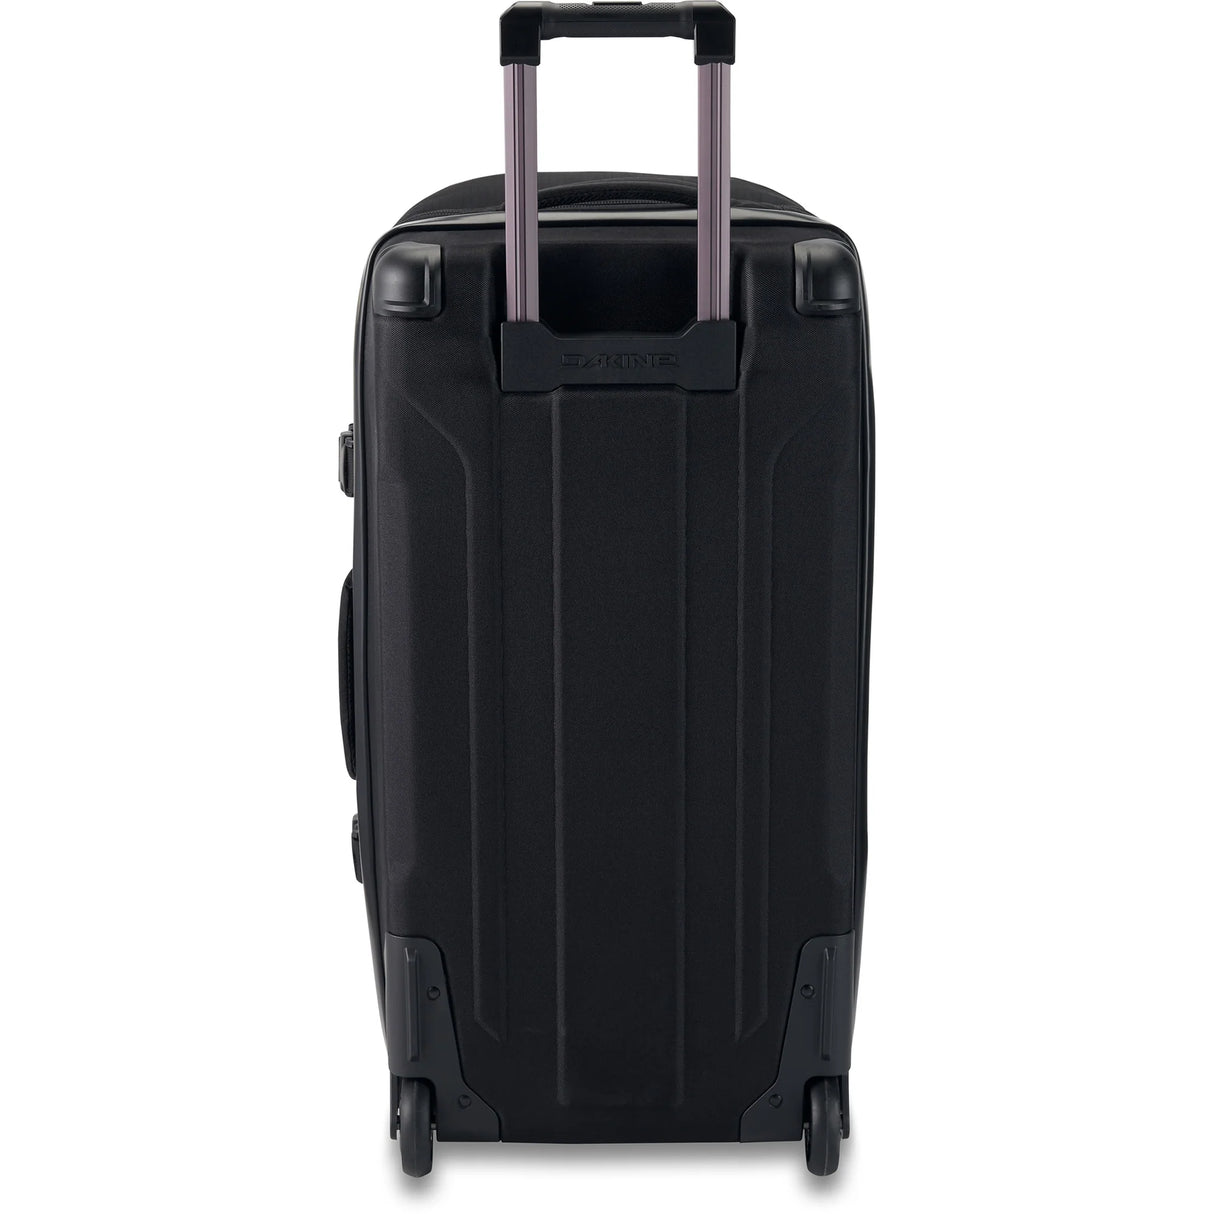 Dakine Split Roller 85L Travel Bag